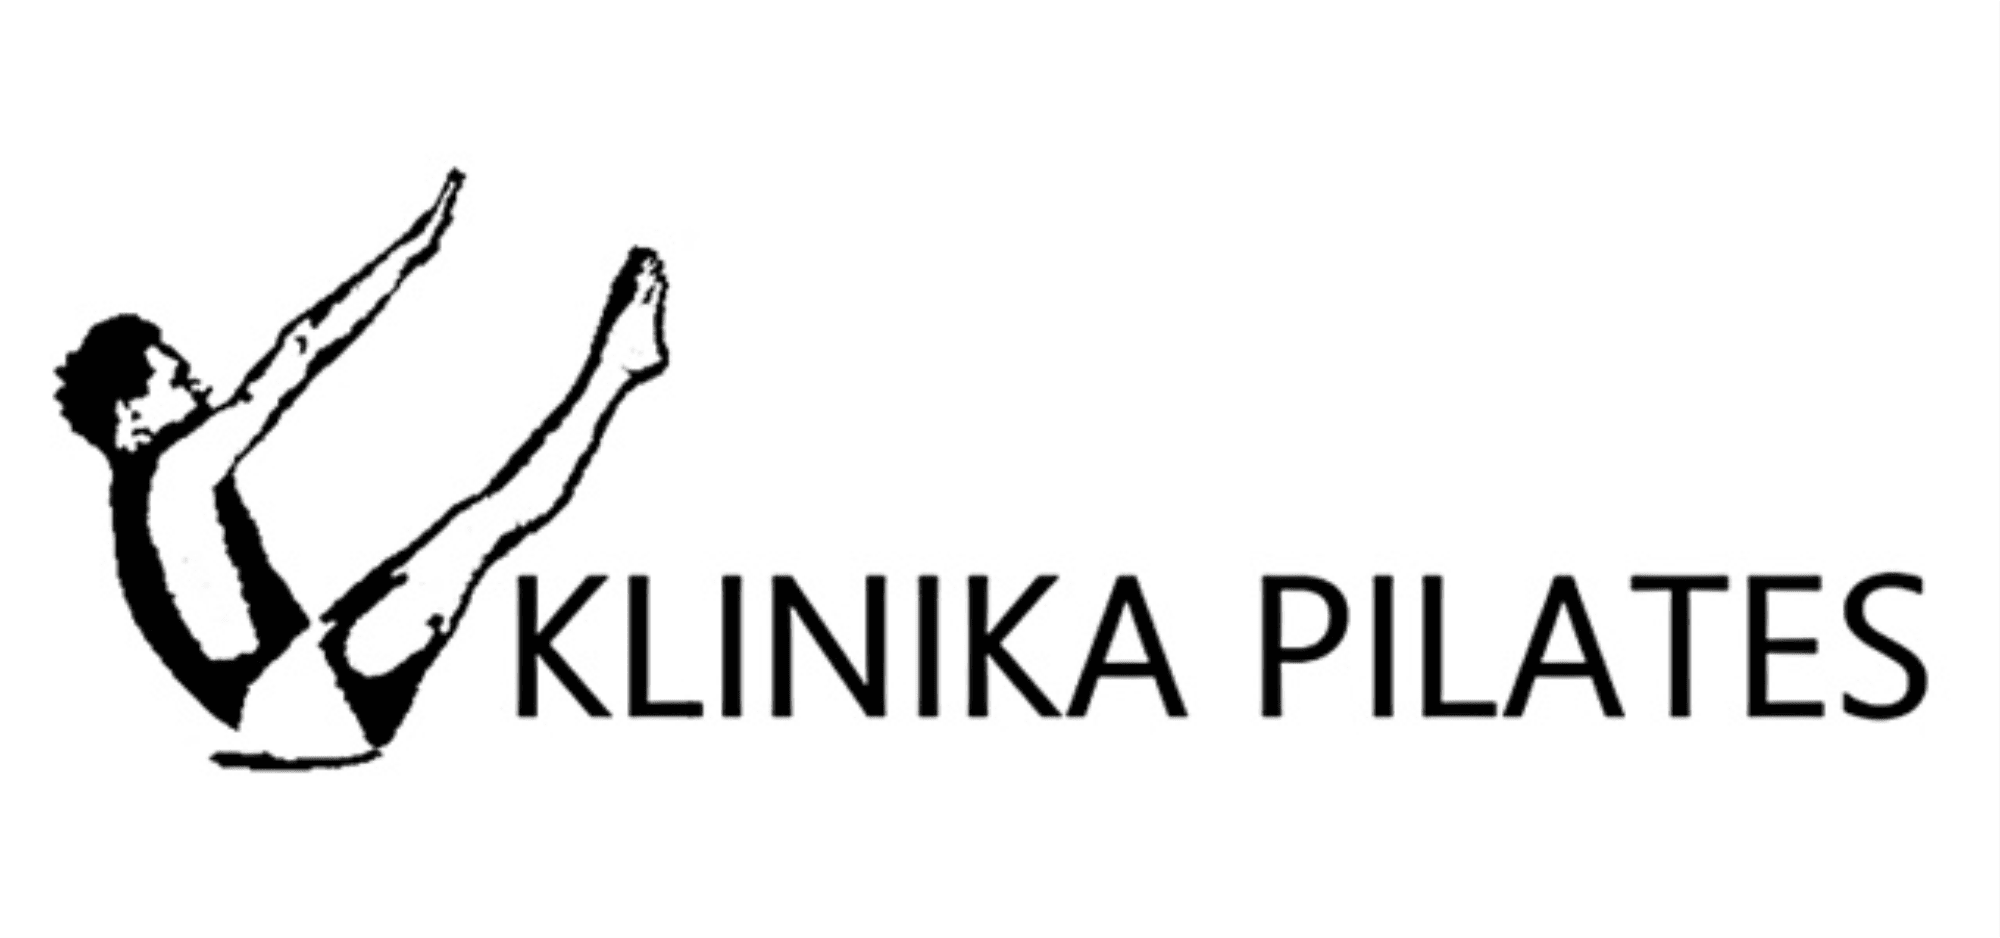 klinika pilates logo